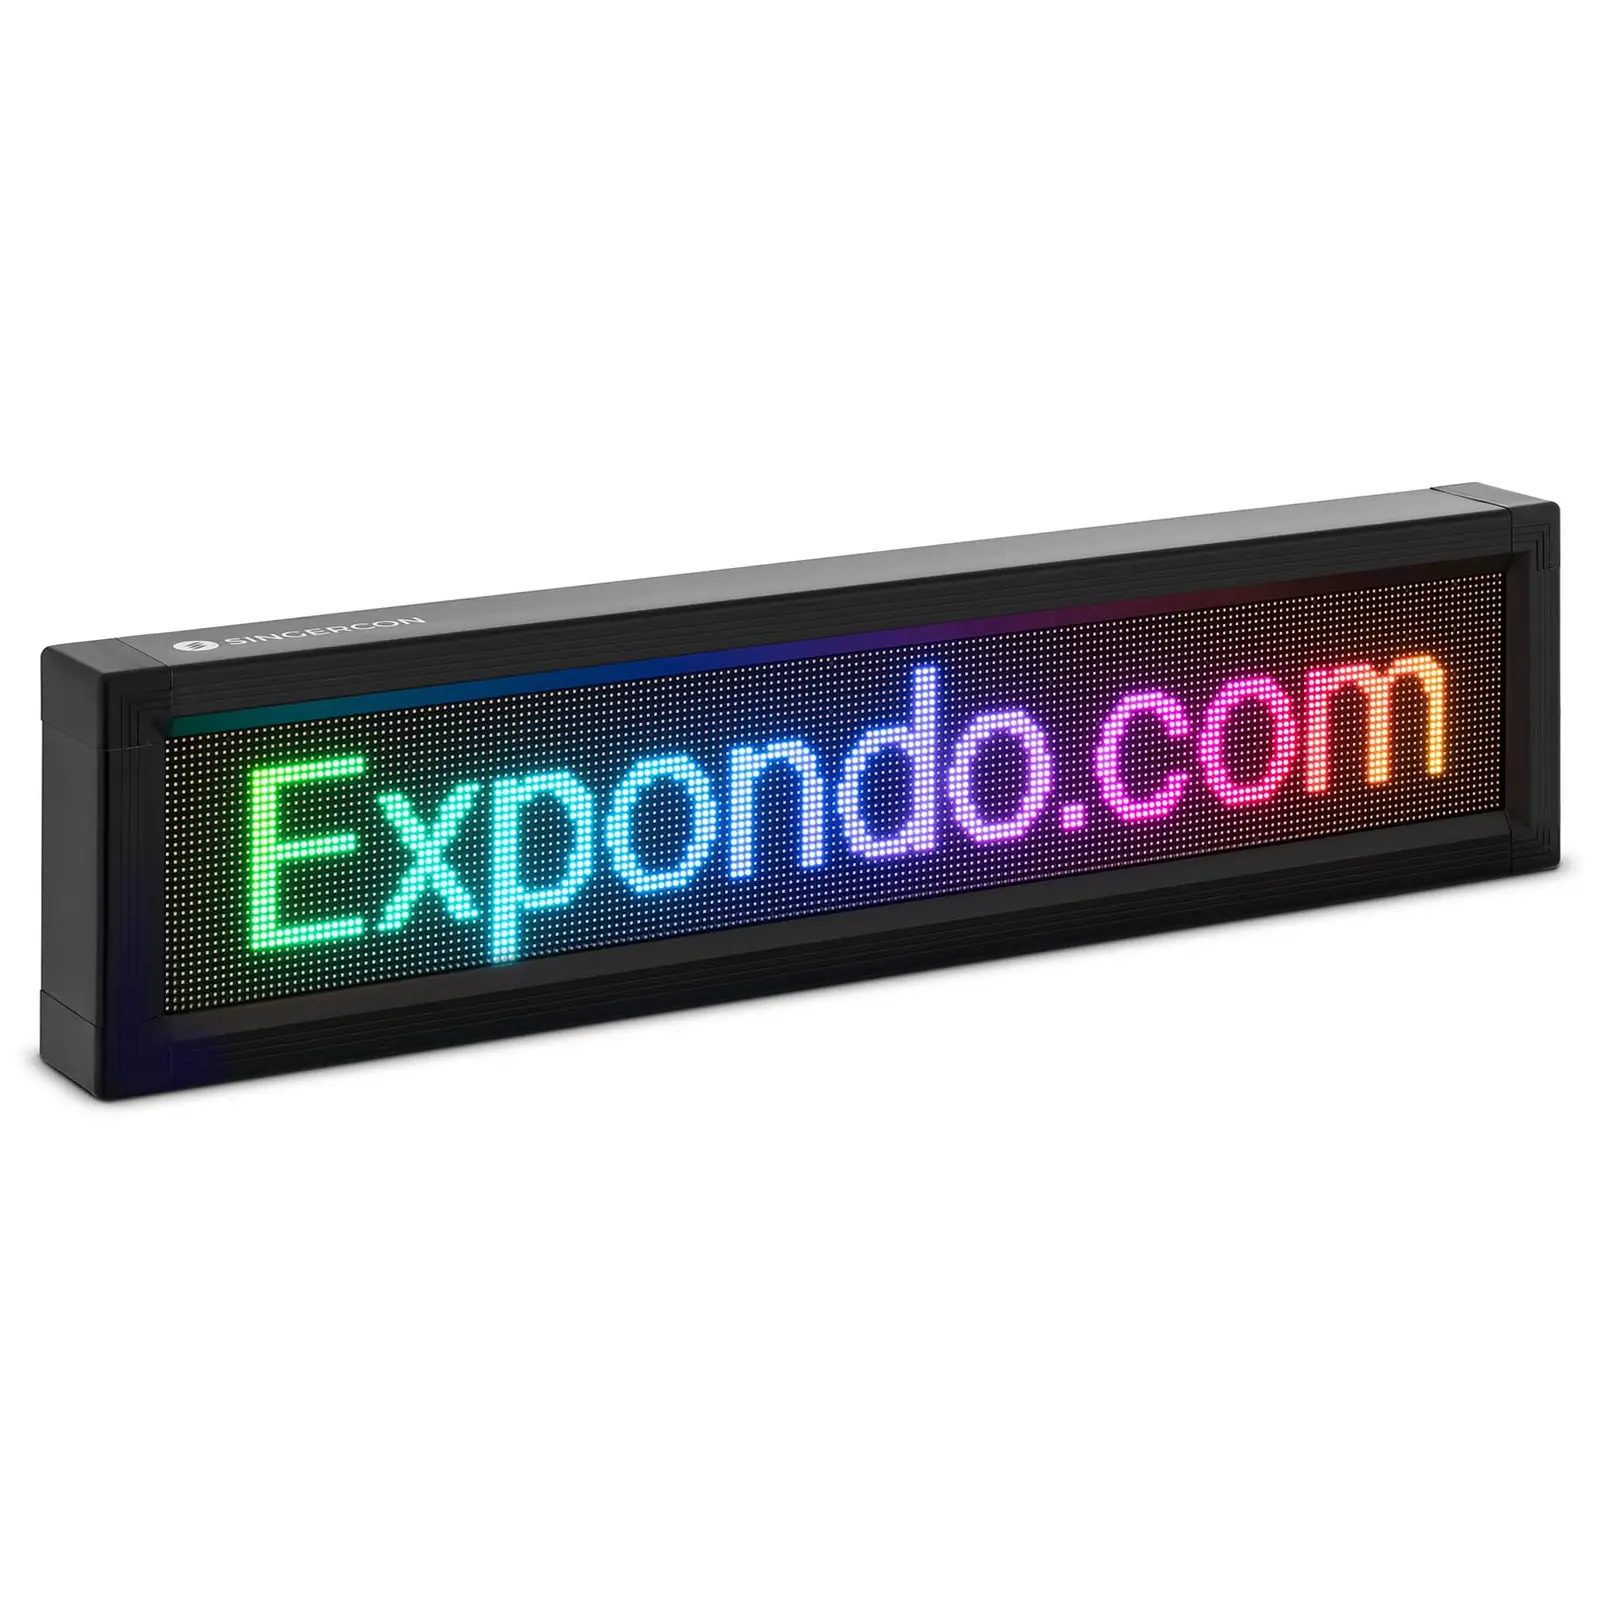 Ploča LED zaslona - 192 x 32 LED dioda u boji - 67 x 19 cm - programabilno putem iOS / Android